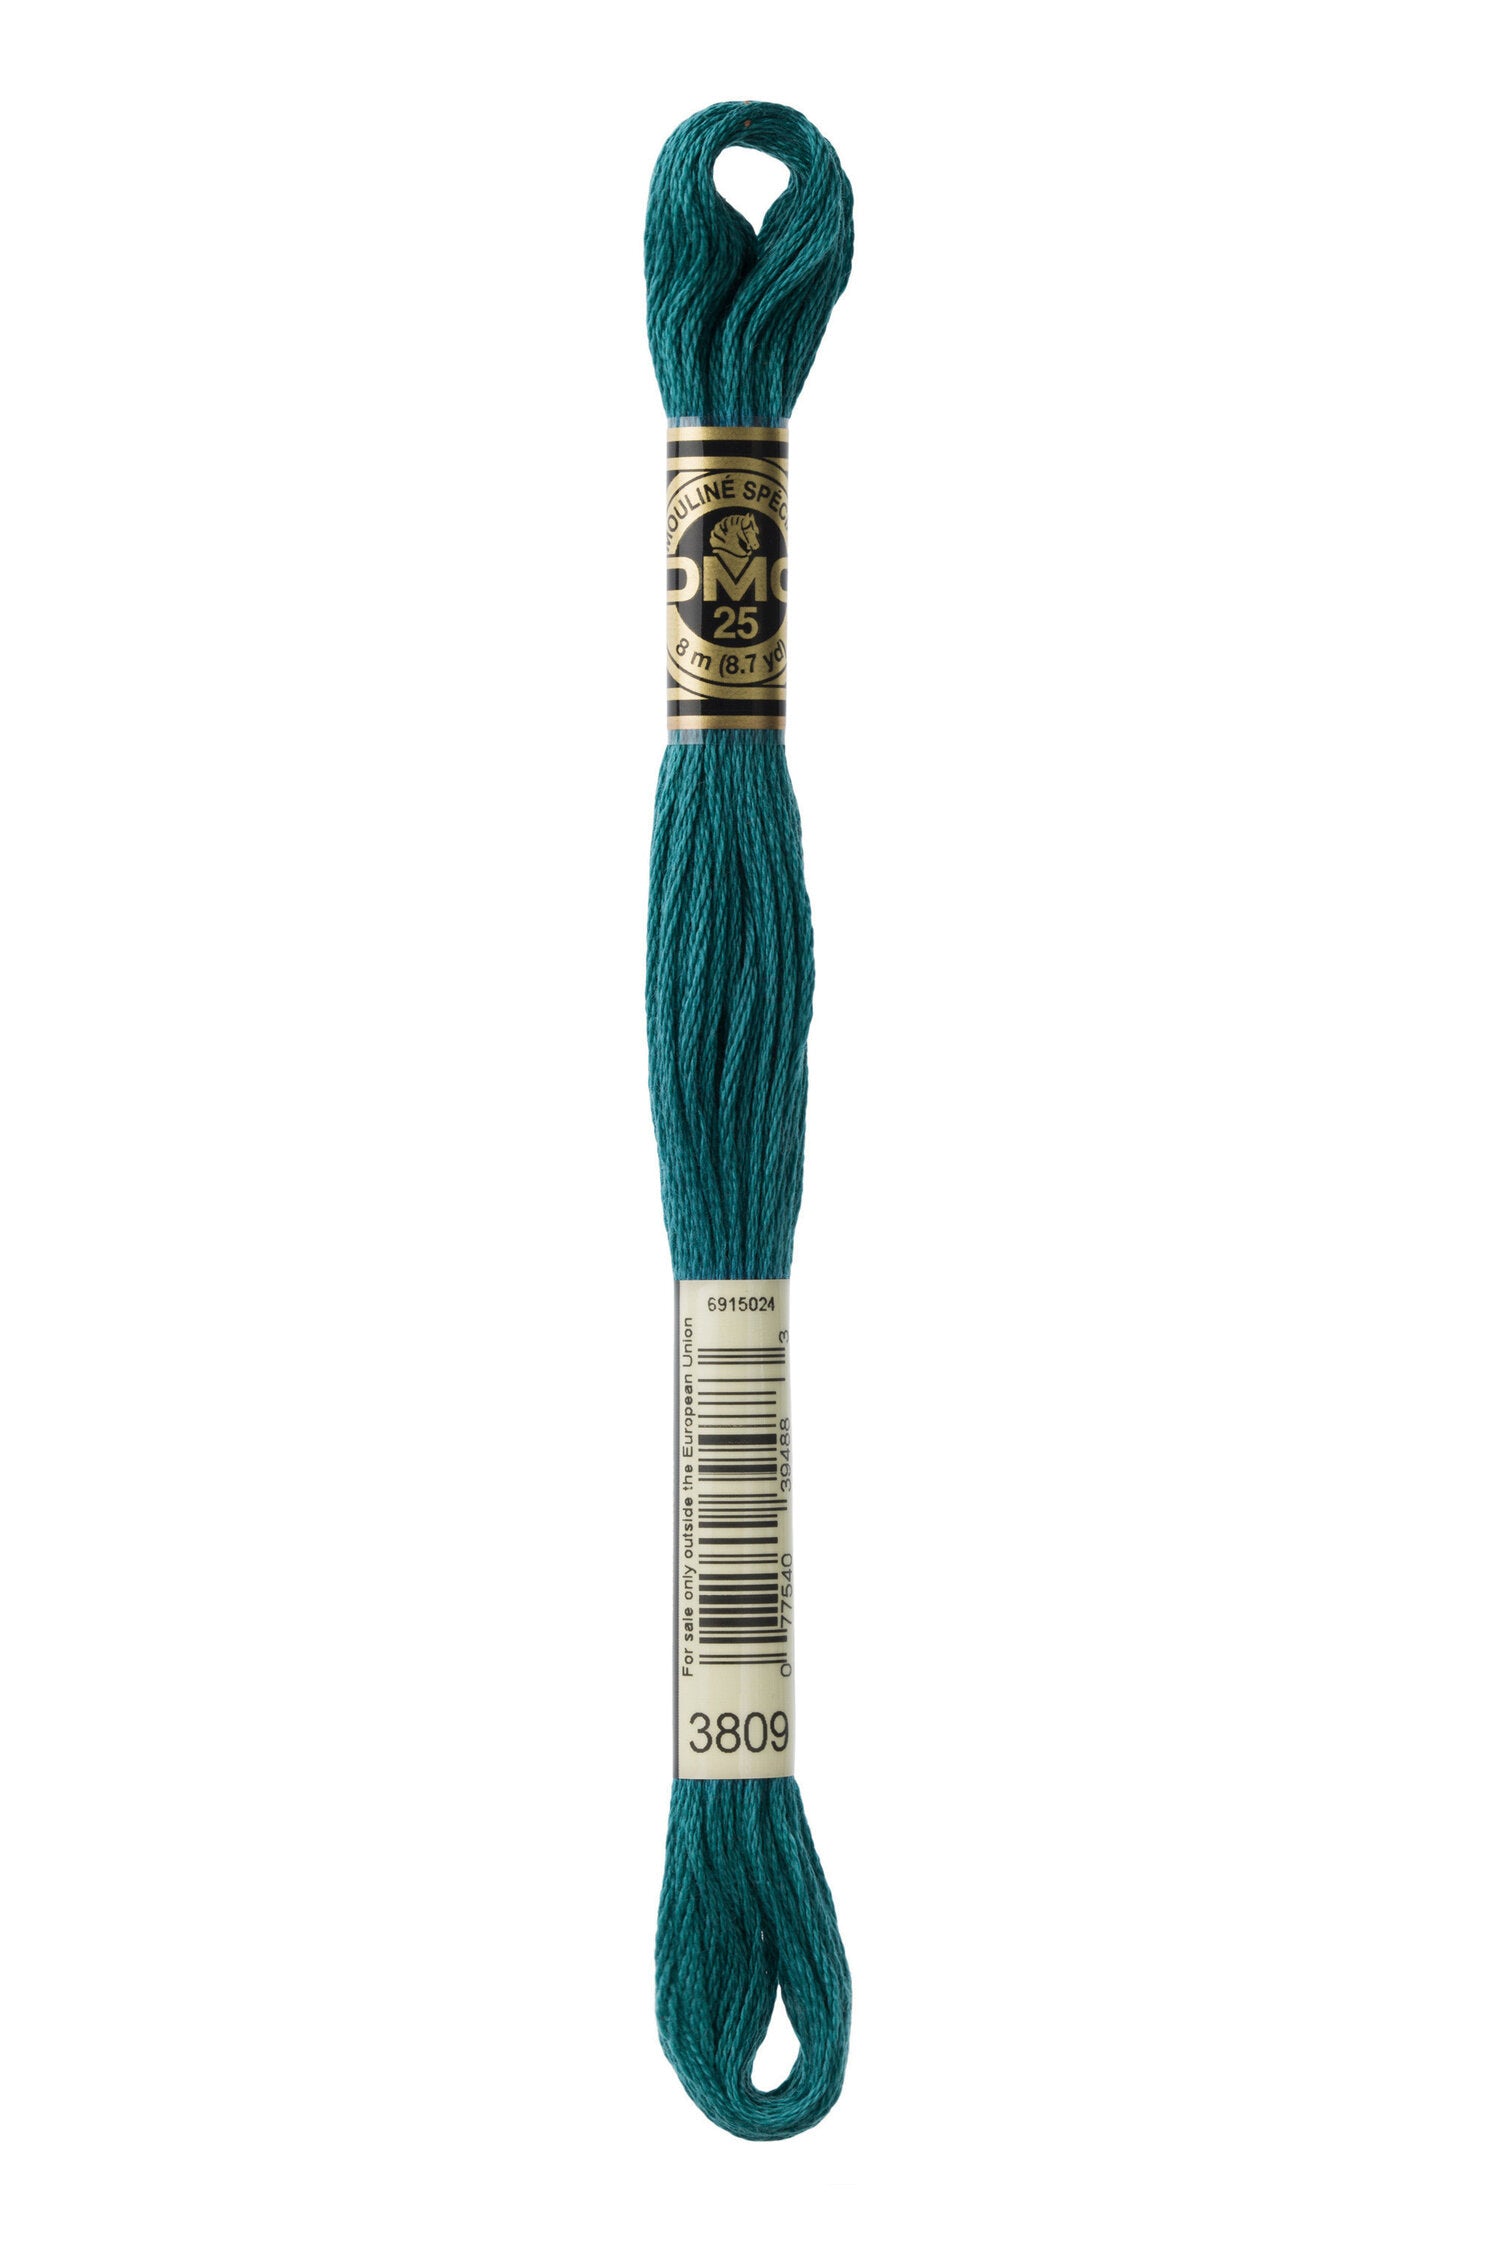 DMC 3809 - Turquoise - Very Dark - DMC 6 Strand Embroidery Thread, Thread & Floss, Thread & Floss, The Crafty Grimalkin - A Cross Stitch Store